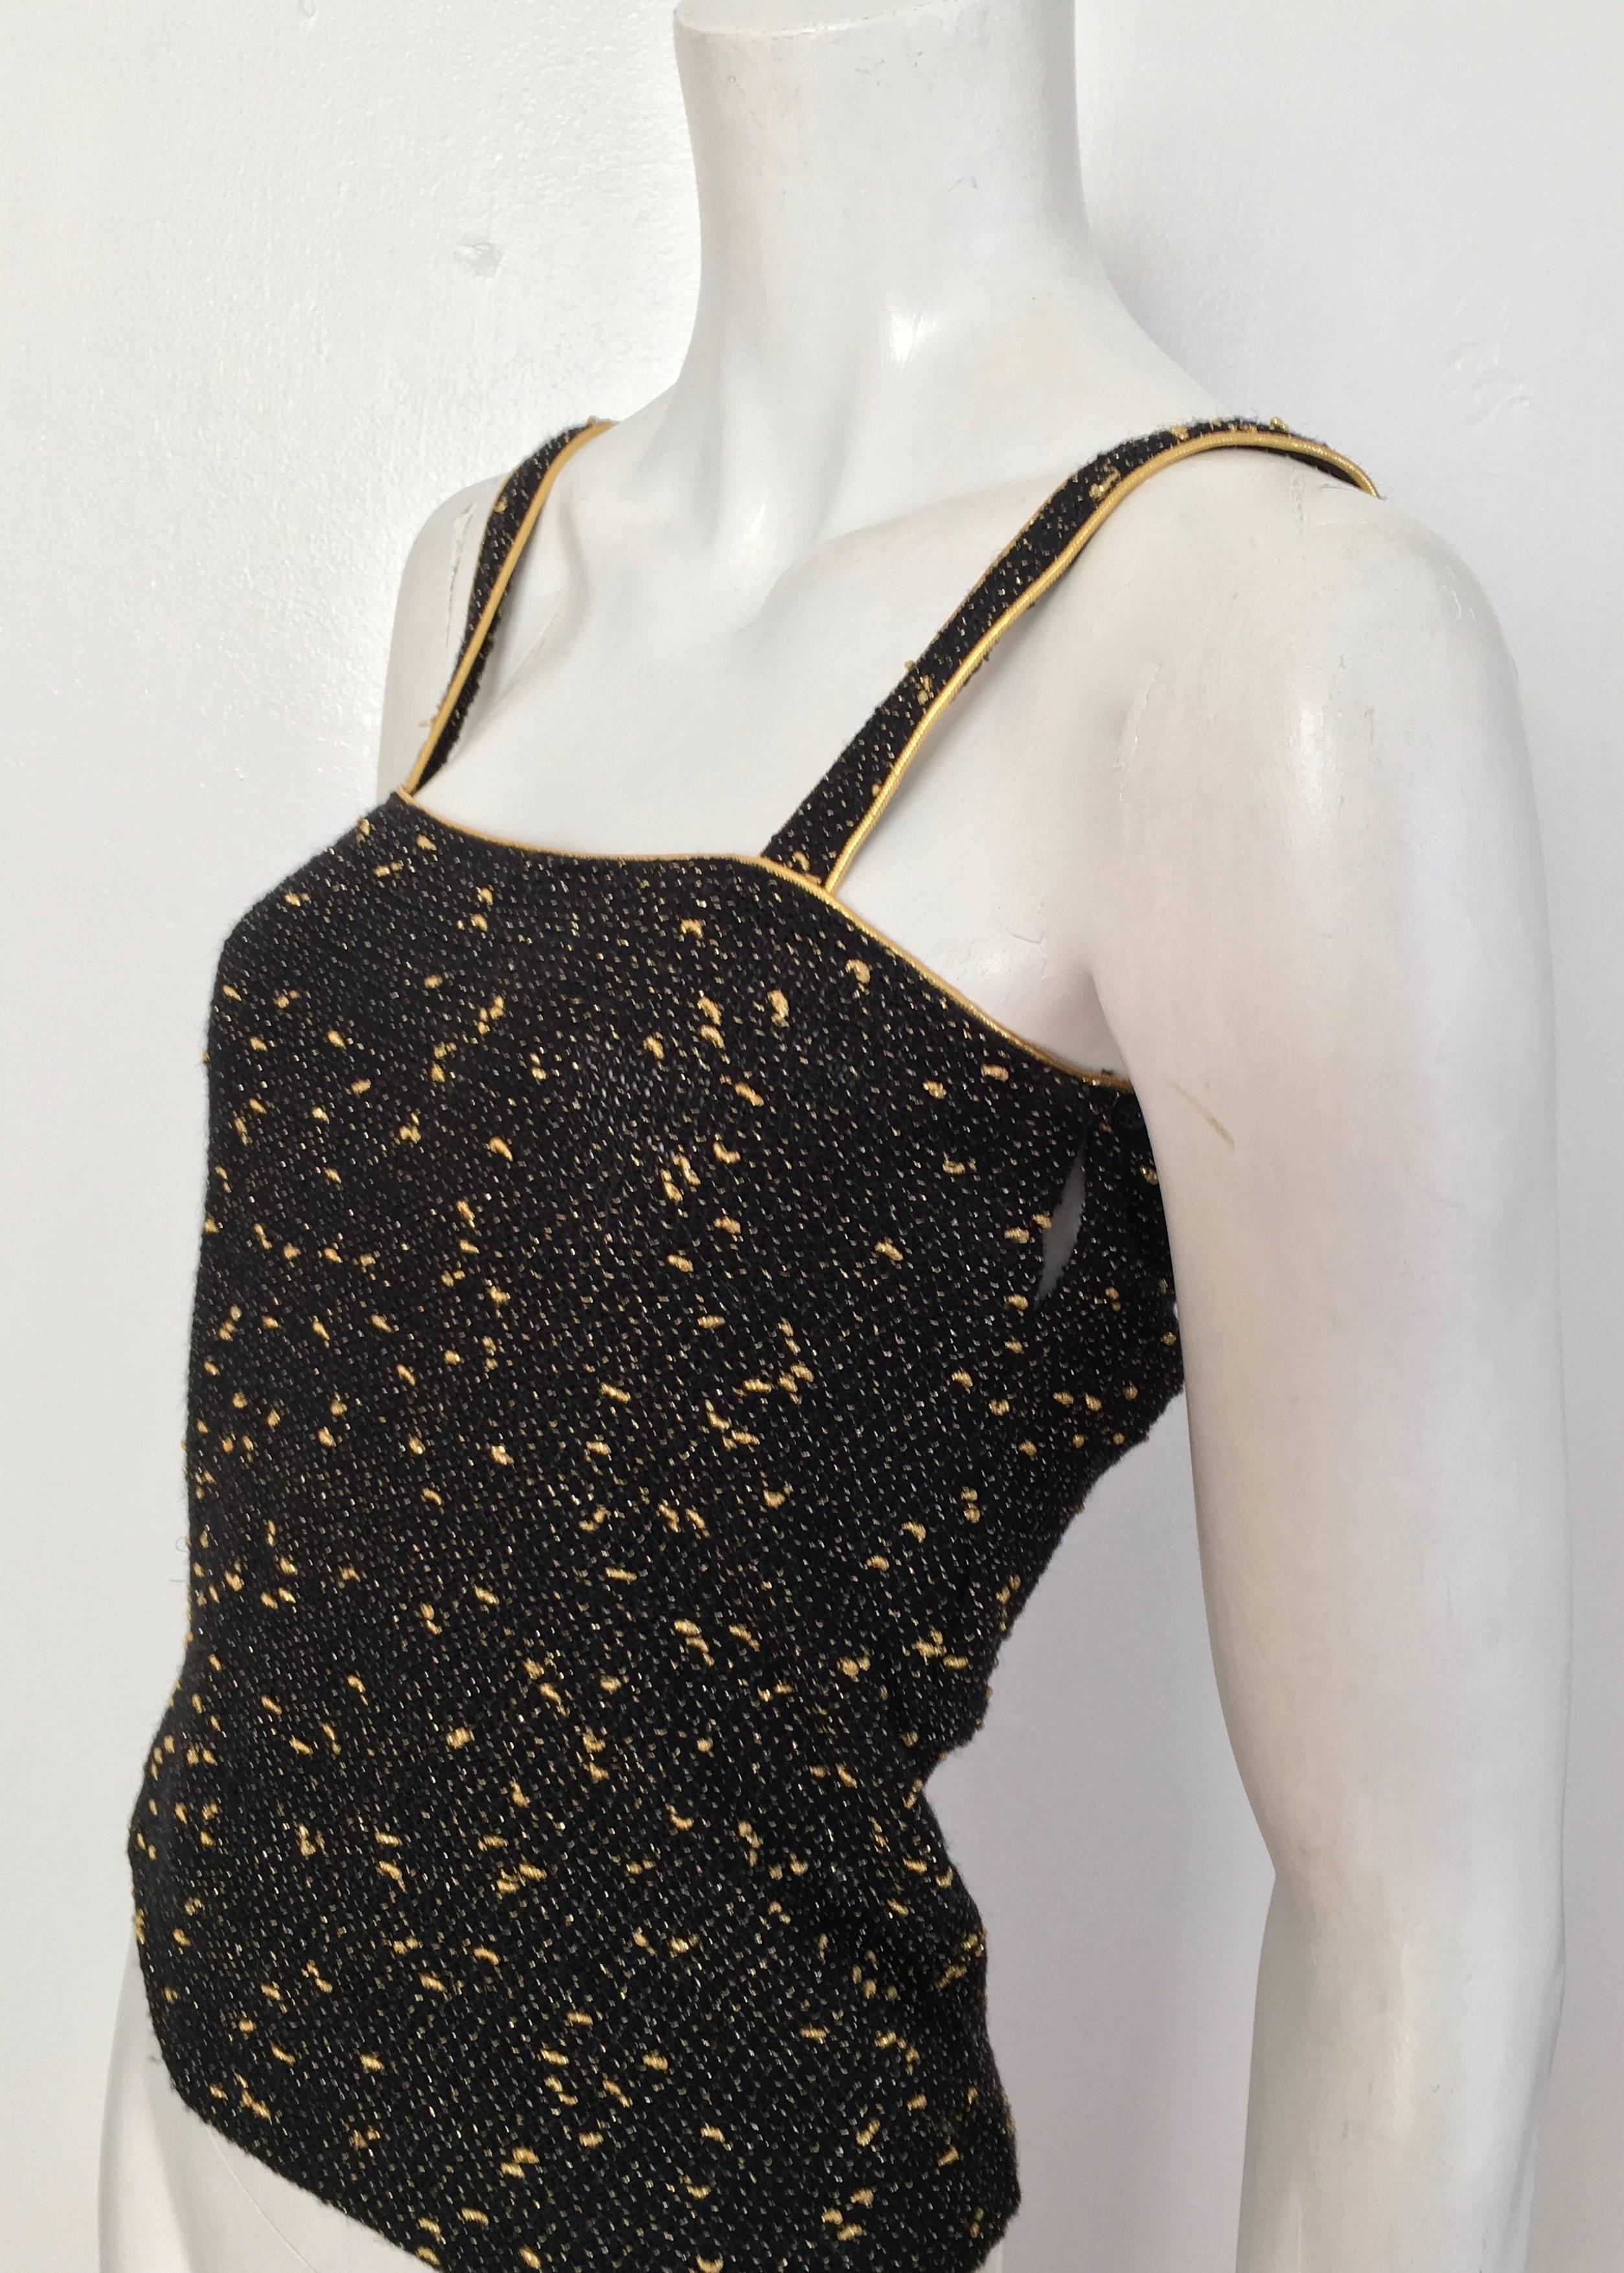 Yves Saint Laurent Black & Gold Lurex Metallic Knit Top Size Small.  For Sale 3